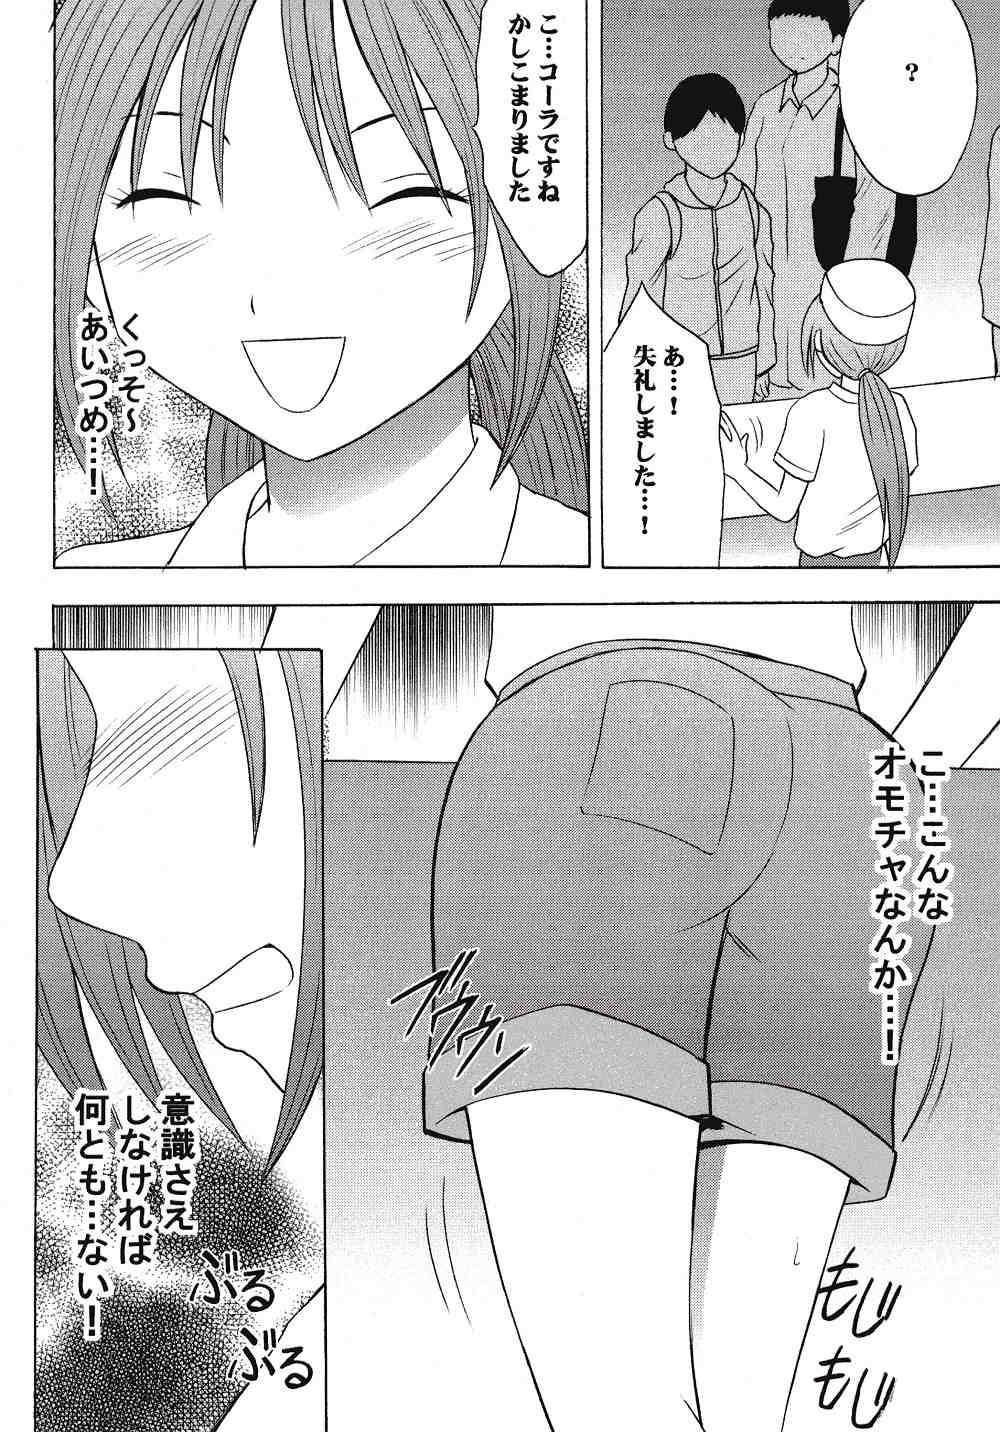 Cuzinho IchigoIchie 2 - Ichigo 100 Gay Oralsex - Page 9